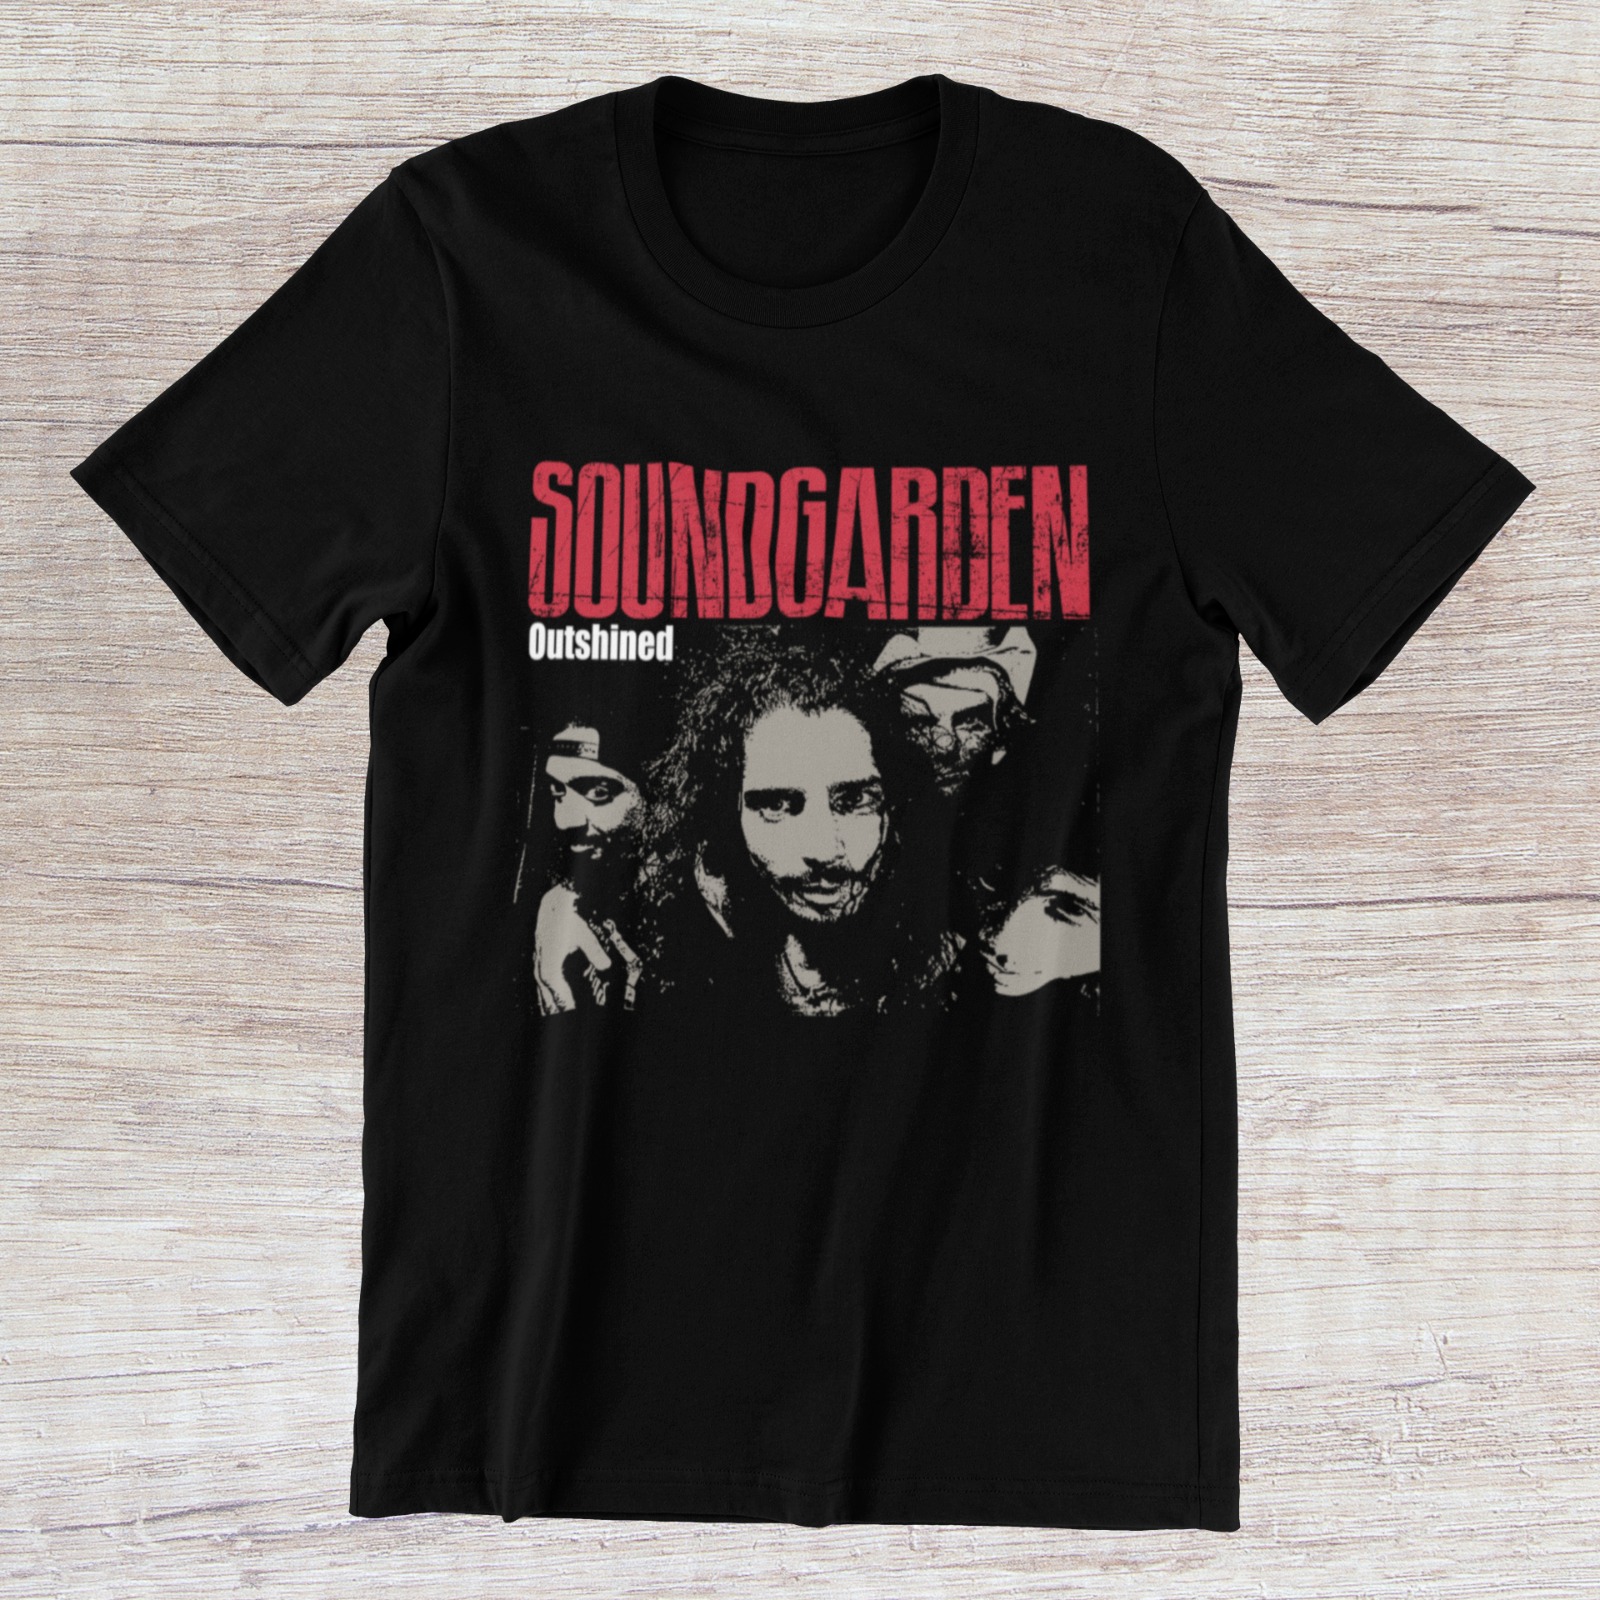 SOUNDGARDEN T-Shirt 90s American Alternative Rock Band on Ring Spun Cotton Tee